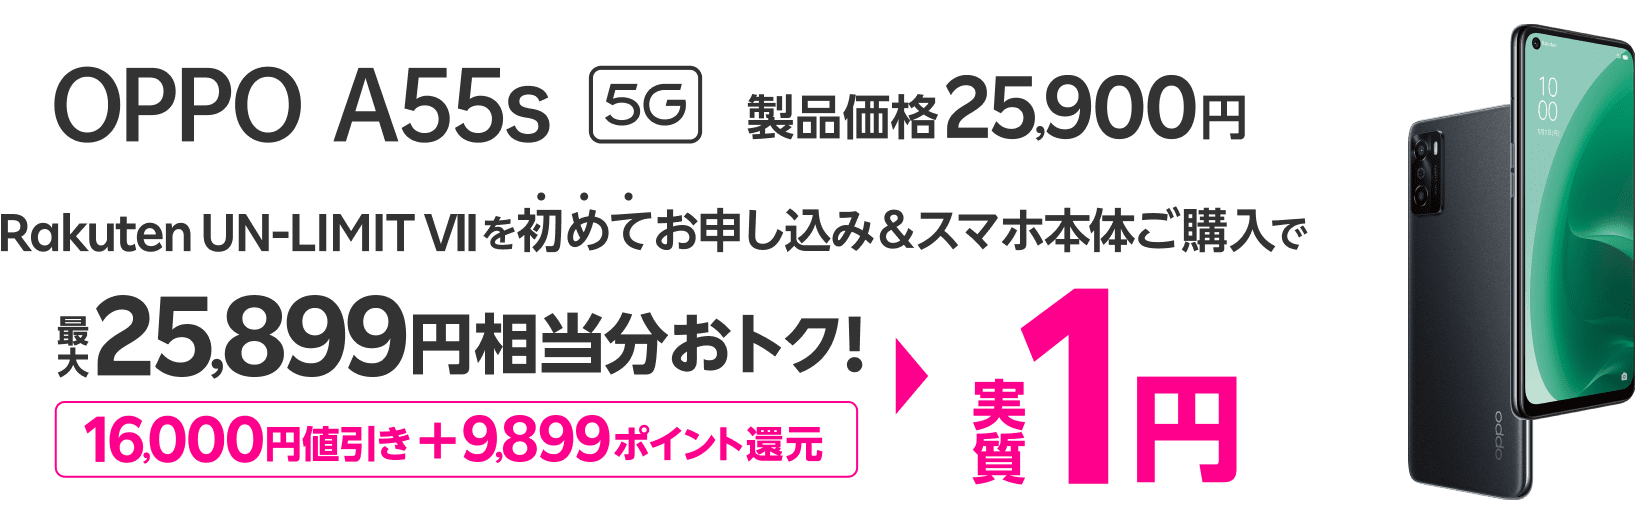 OPPO A55s 5G Rakuten UN-LIMIT VIIを初めてお申し込み＆スマホ本体ご購入で最大25,899円相当分おトク!